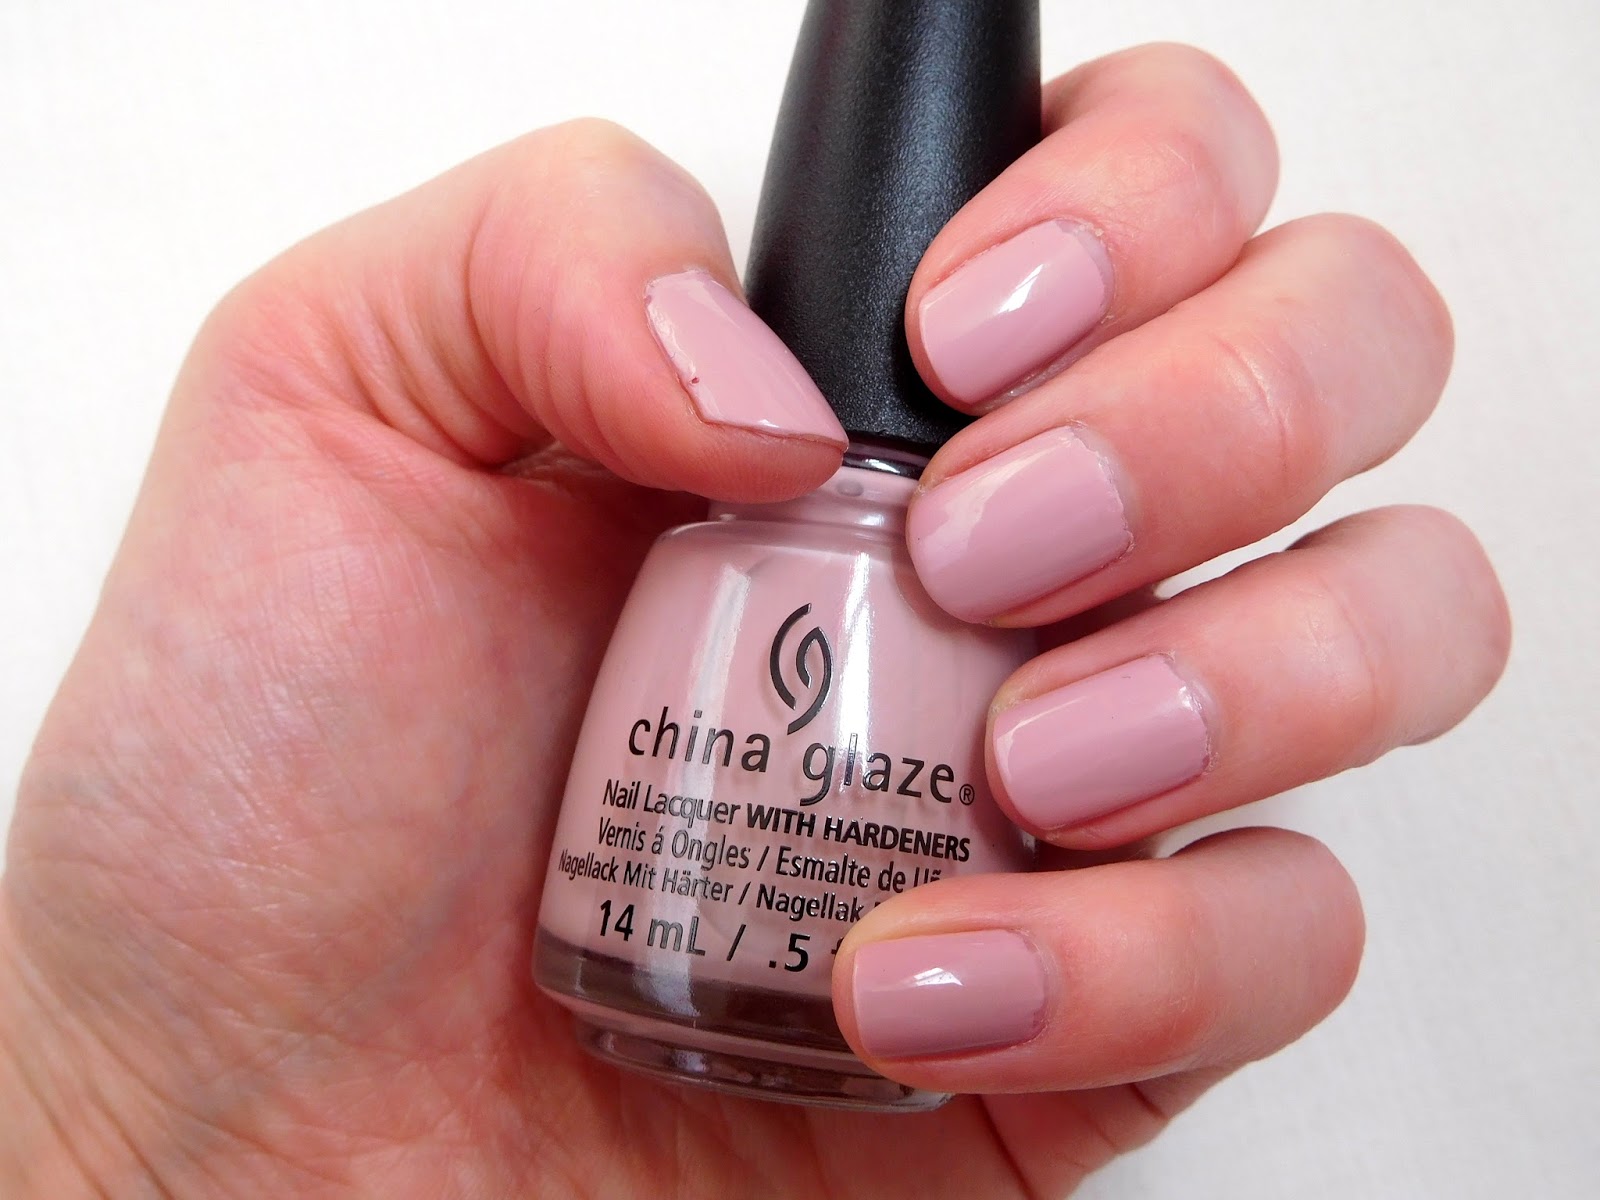 4. China Glaze Nail Polish - wide 10